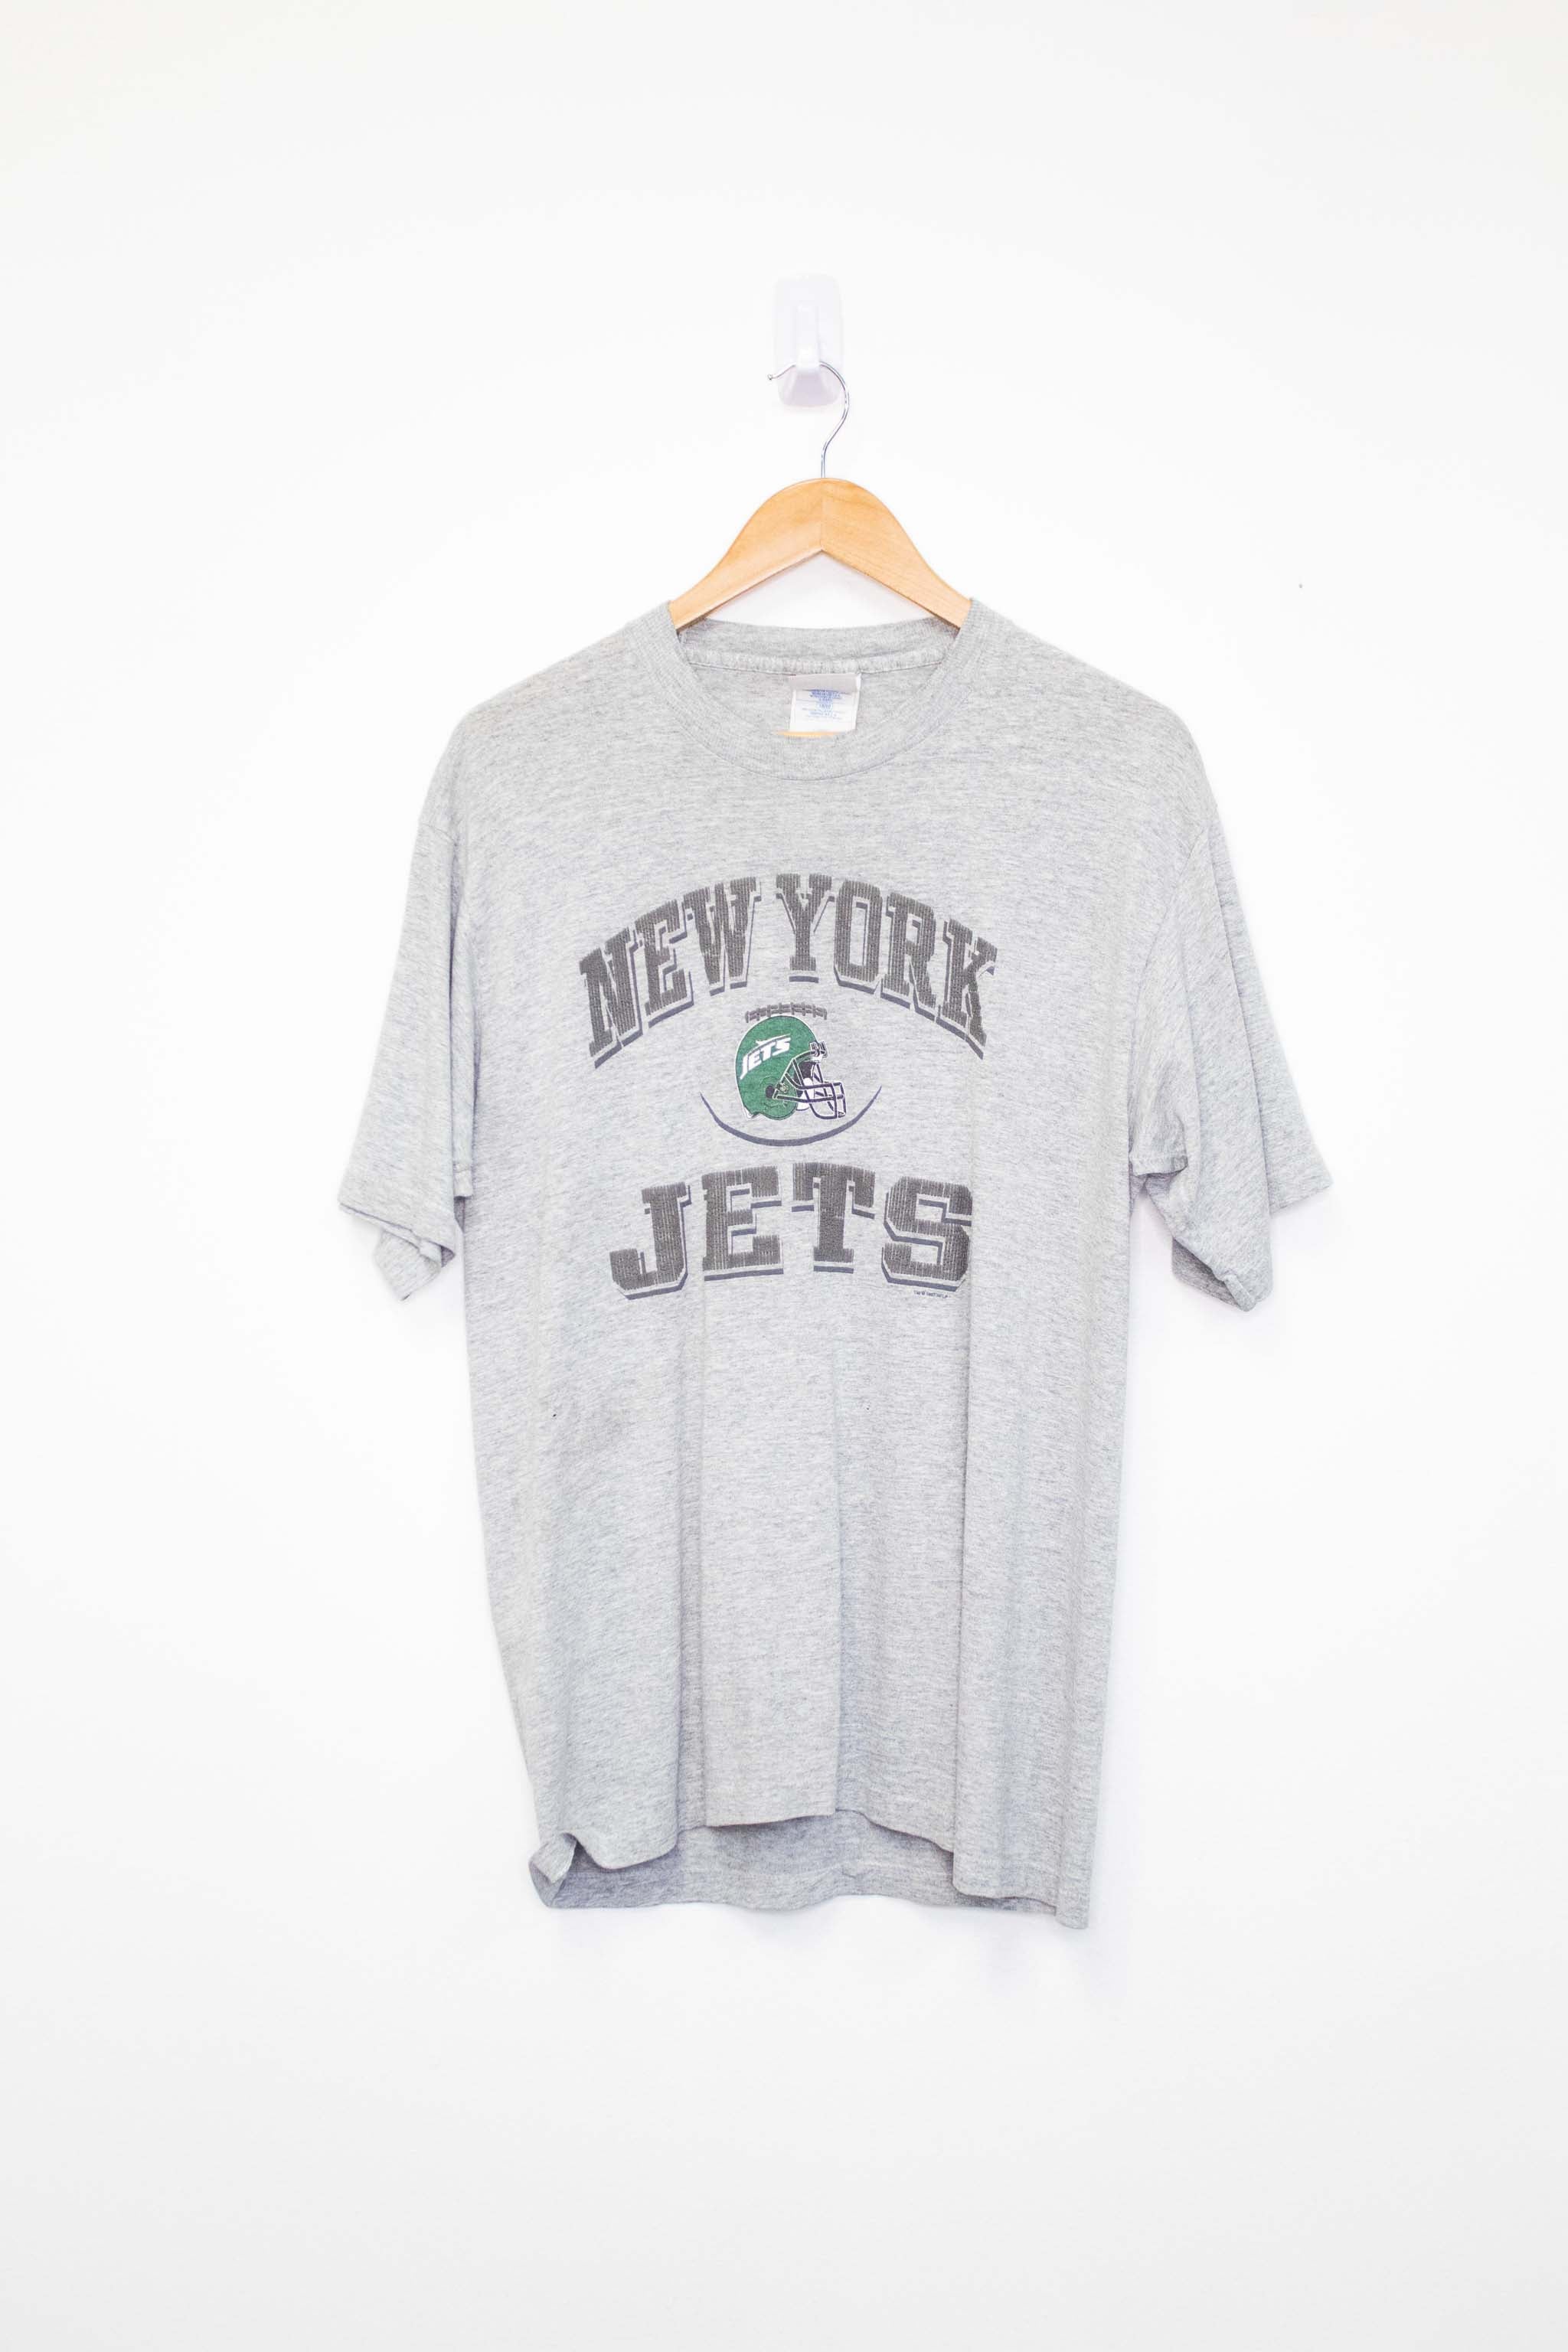 Vintage New York Jets Tee